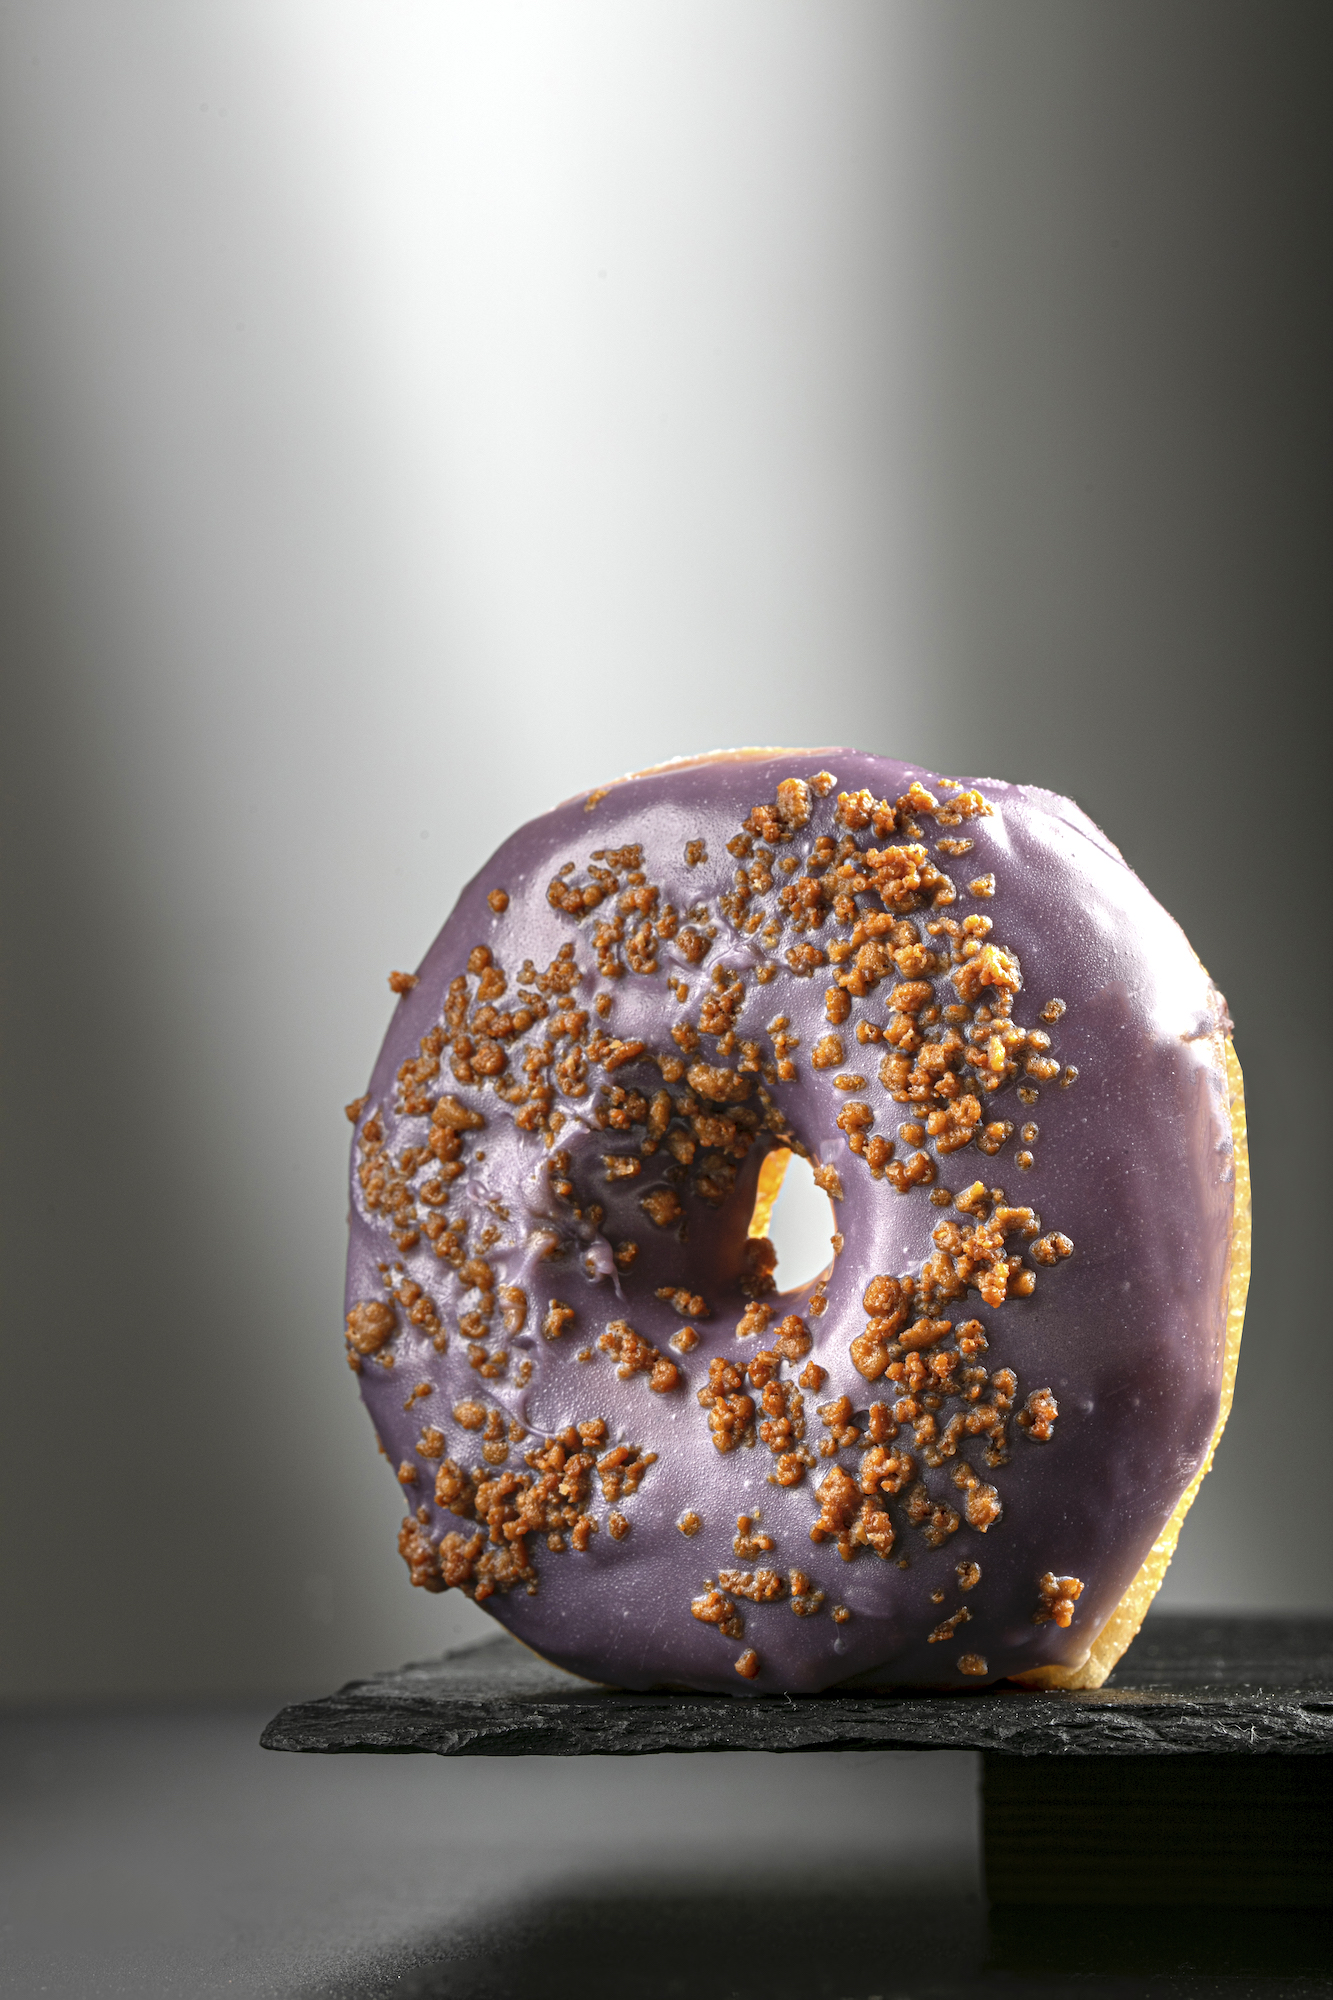 Breadlounge's ube with latik doughnut